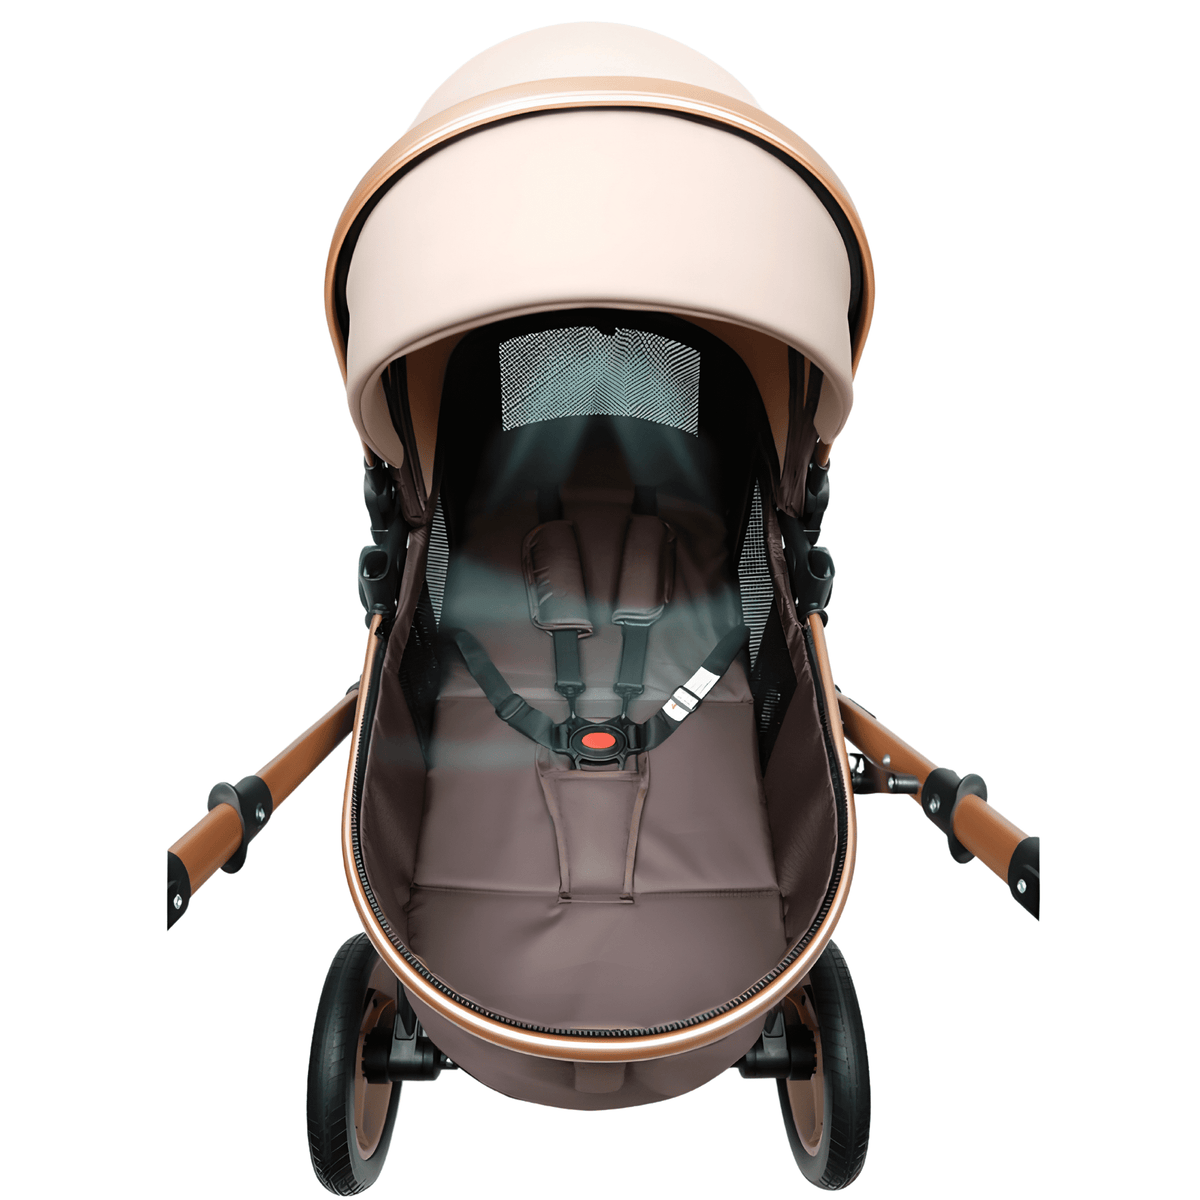 Premium (Special Edition) 3-in-1 Baby Stroller